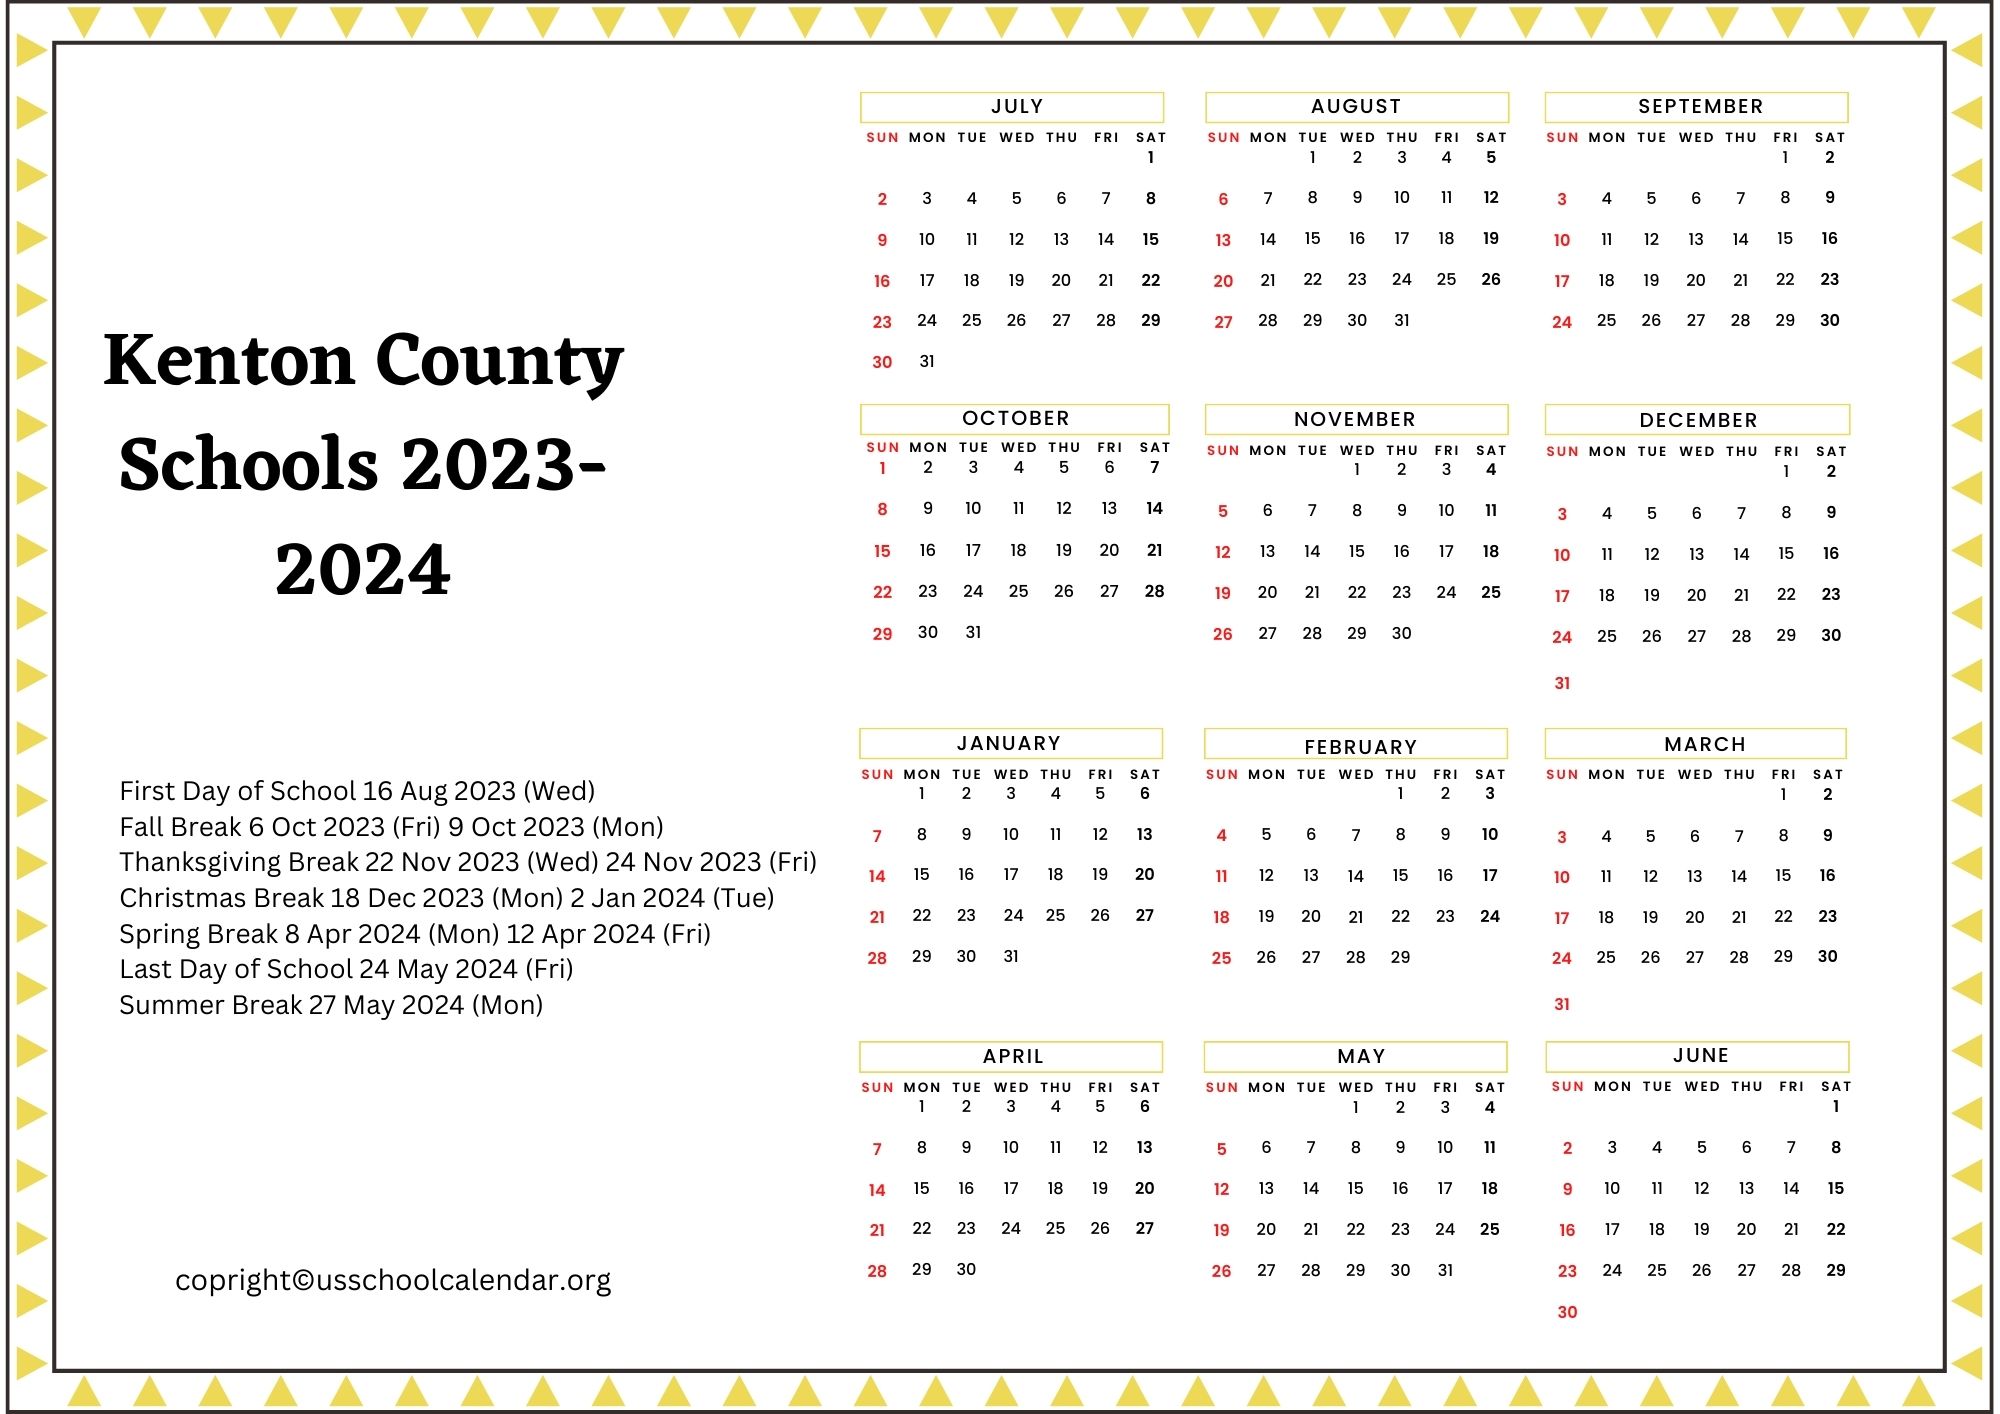 kenton-county-schools-calendar-with-holidays-2023-2024